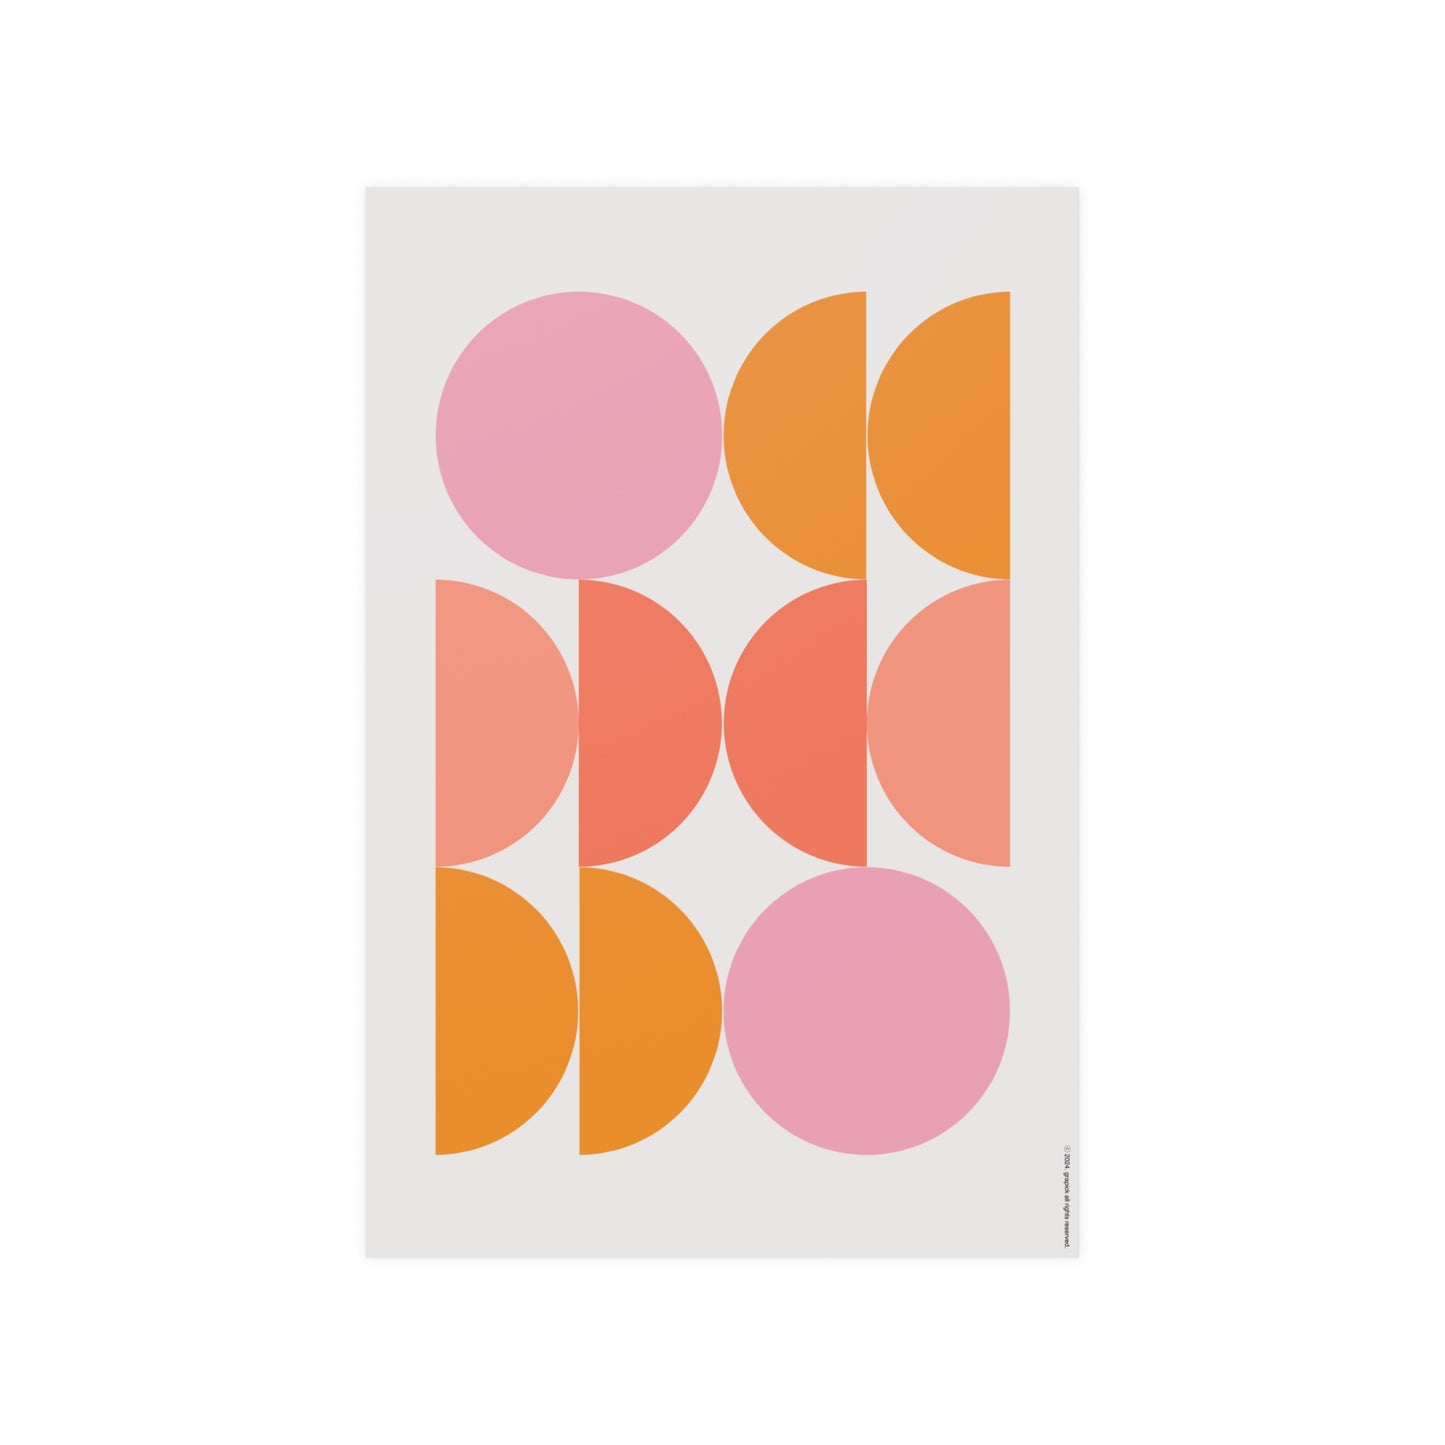 Minimalist Pink Bauhaus-Inspired Shapes Poster - Geometric Art